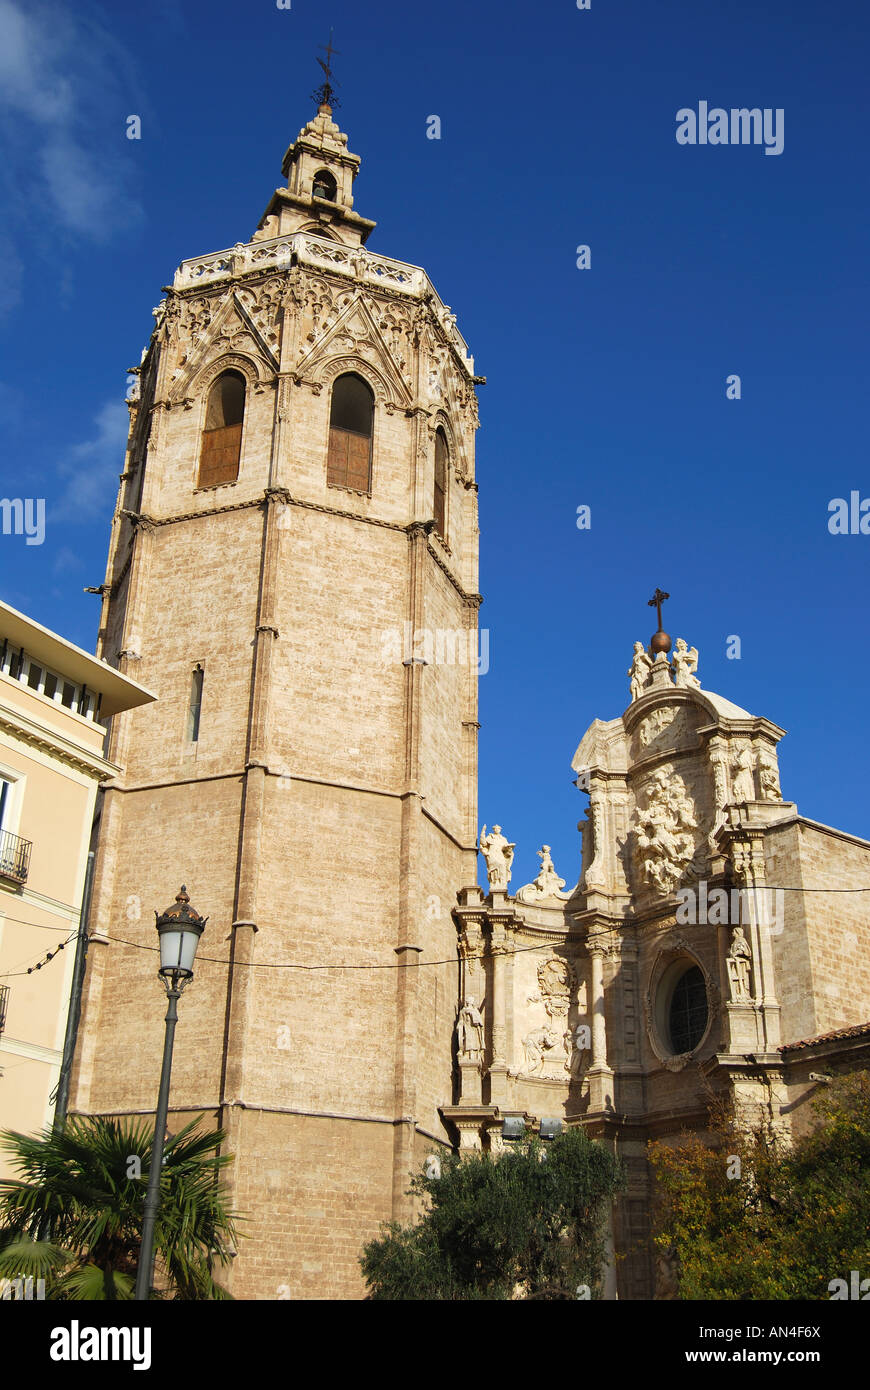 Beffroi de la cathédrale, la Plaza de la Reina, Valencia, Costa del Azahar, Valencia Province, Espagne Banque D'Images